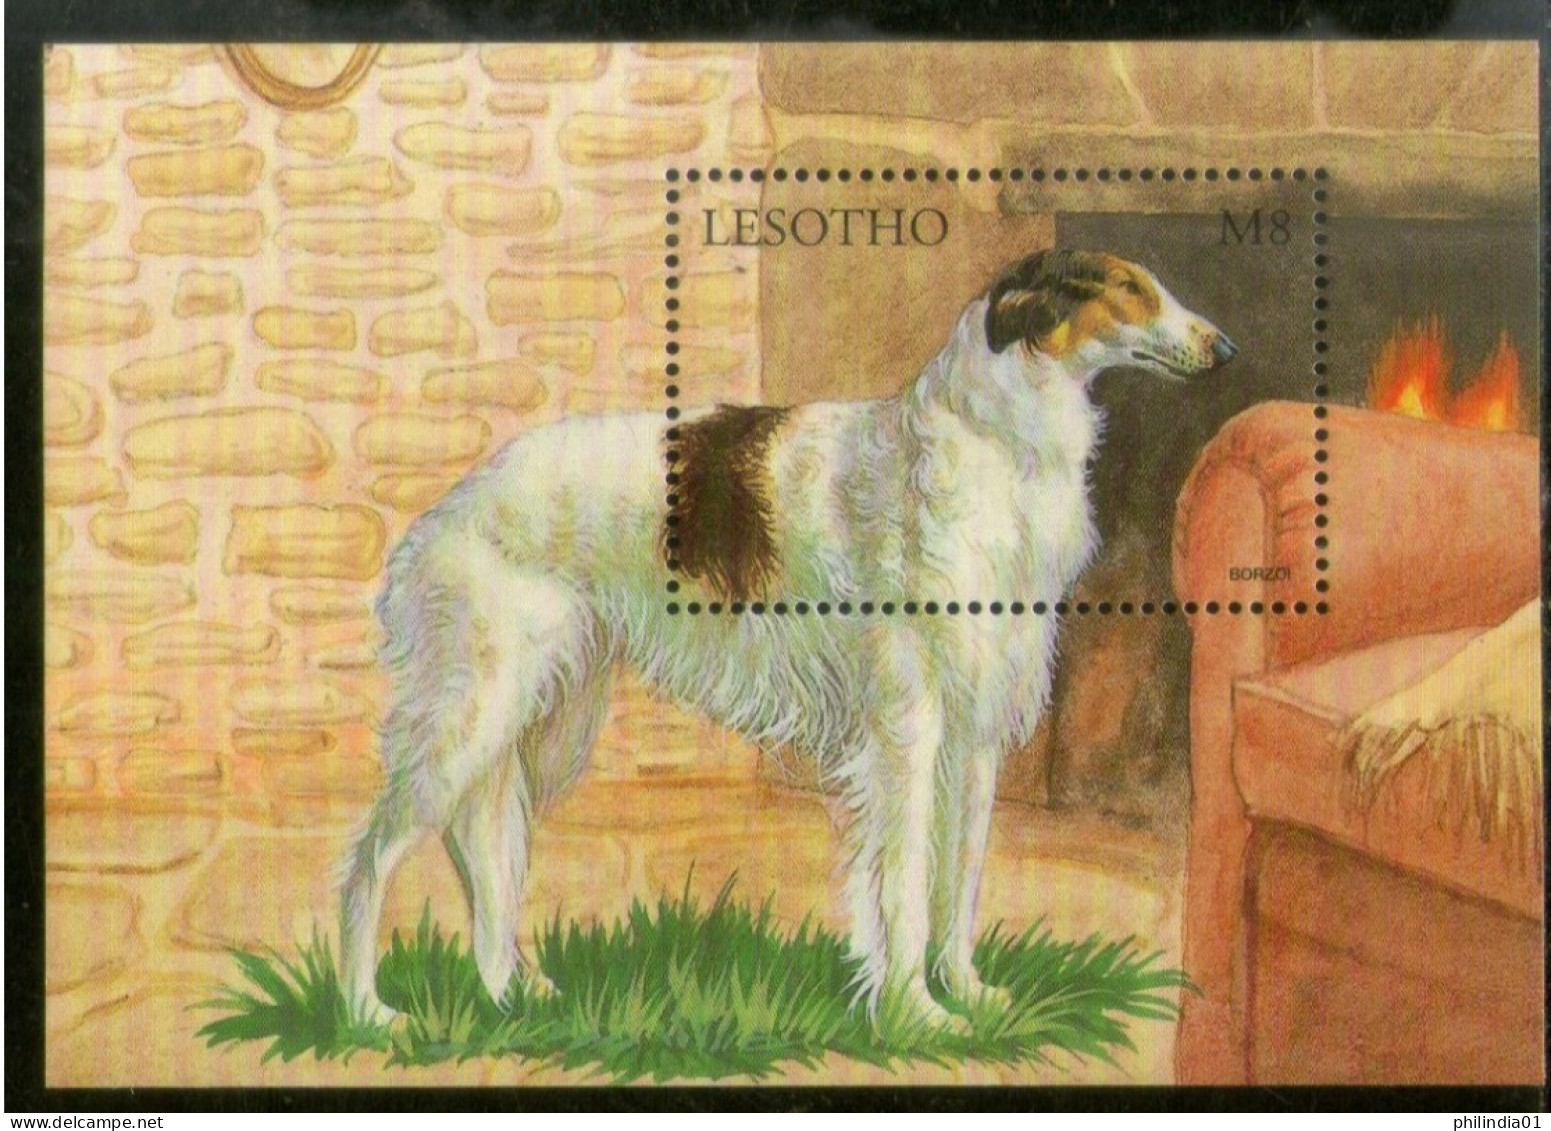 Lesotho 1999 Borzoi Dogs Of World Pet Animals Sc 1176 M/s MNH # 1942 - Hunde